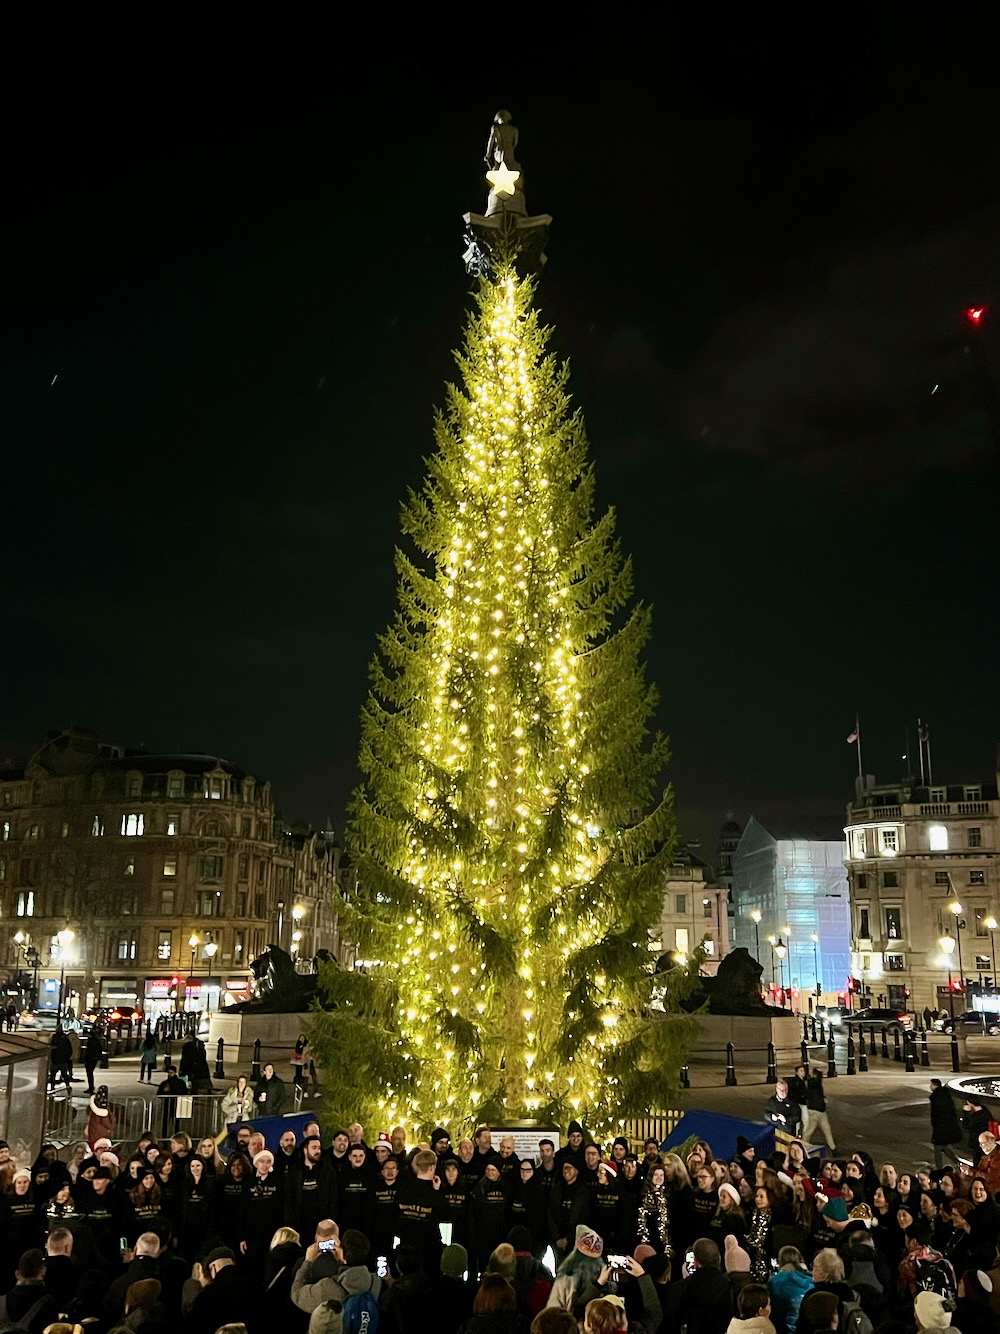 Carol singing at Christmas tree in Trafalgar Square in London. Photo Credit: © Ursula Petula Barzey.